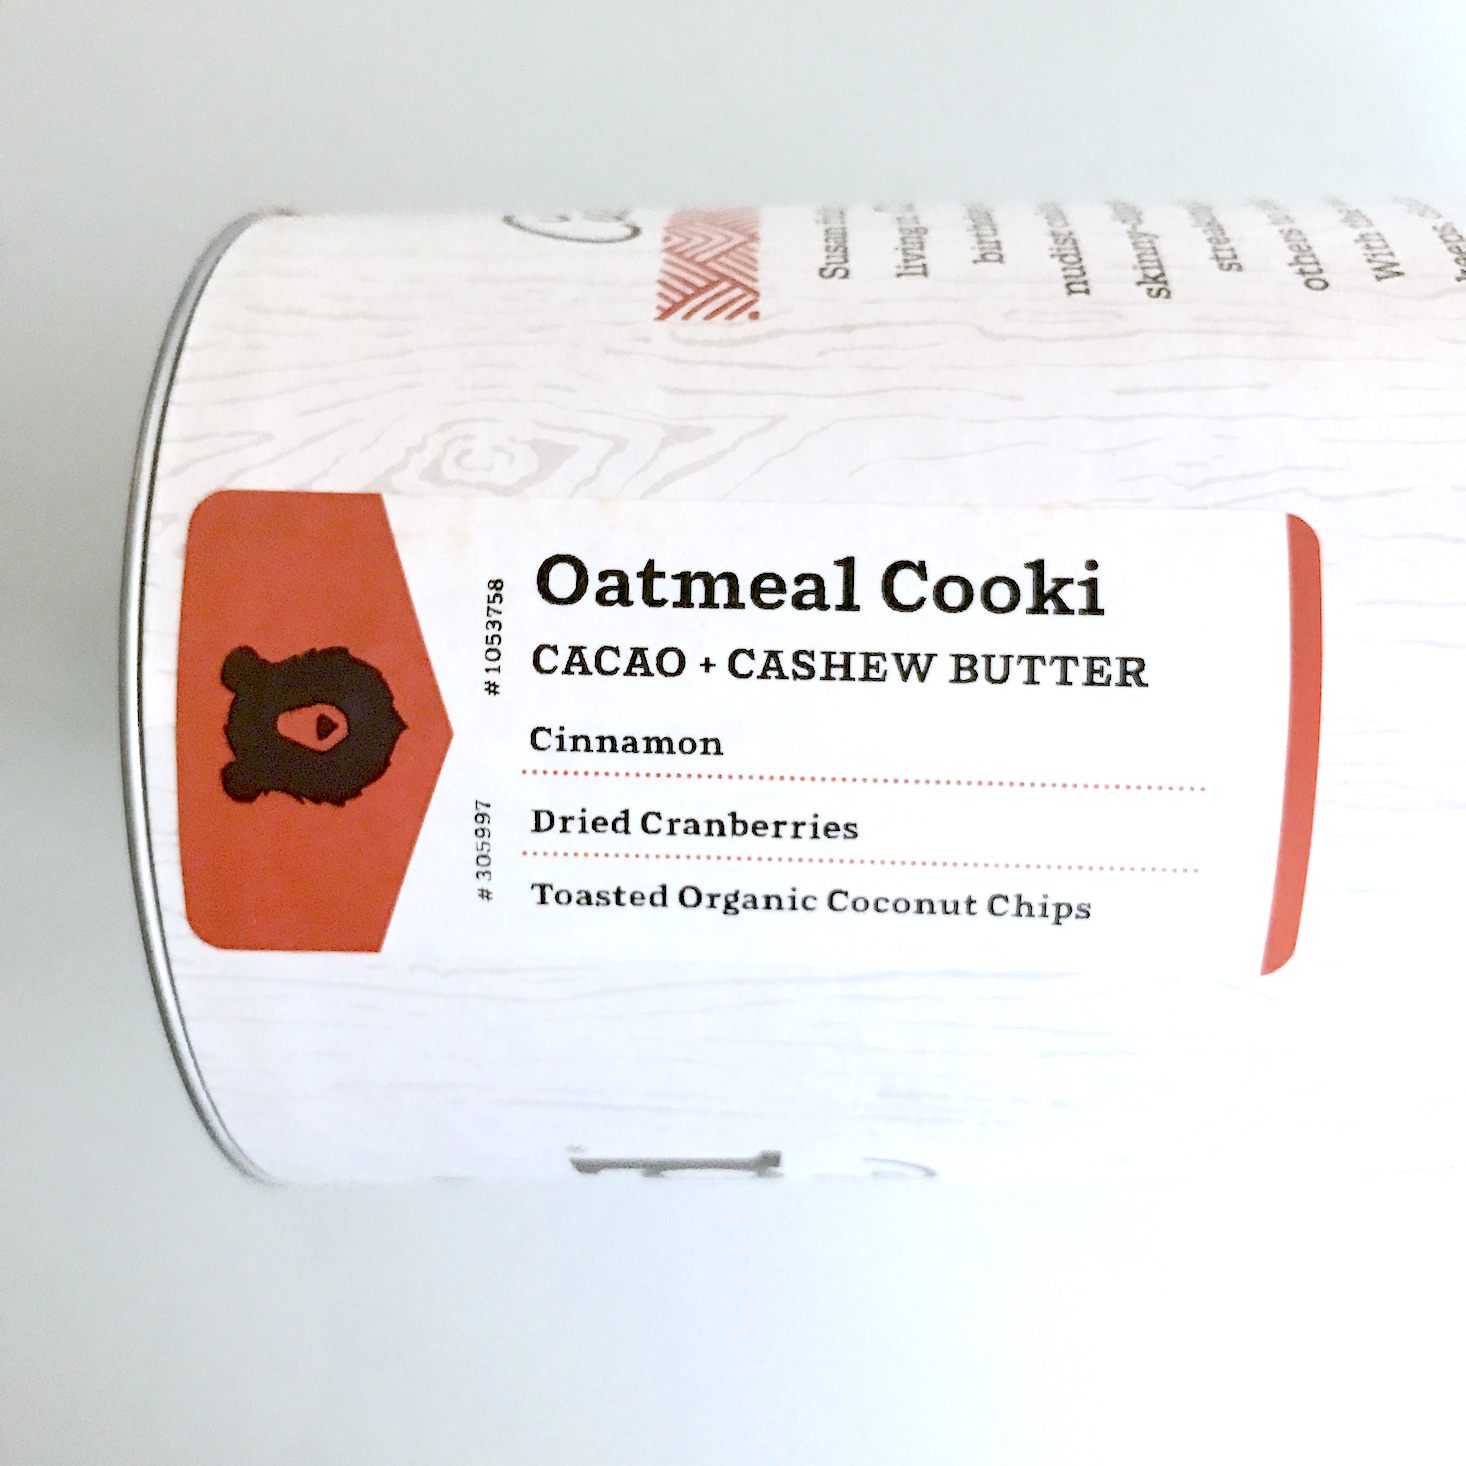 Bare Naked Custom Granola January 2018 - oatmeal cookie granola details